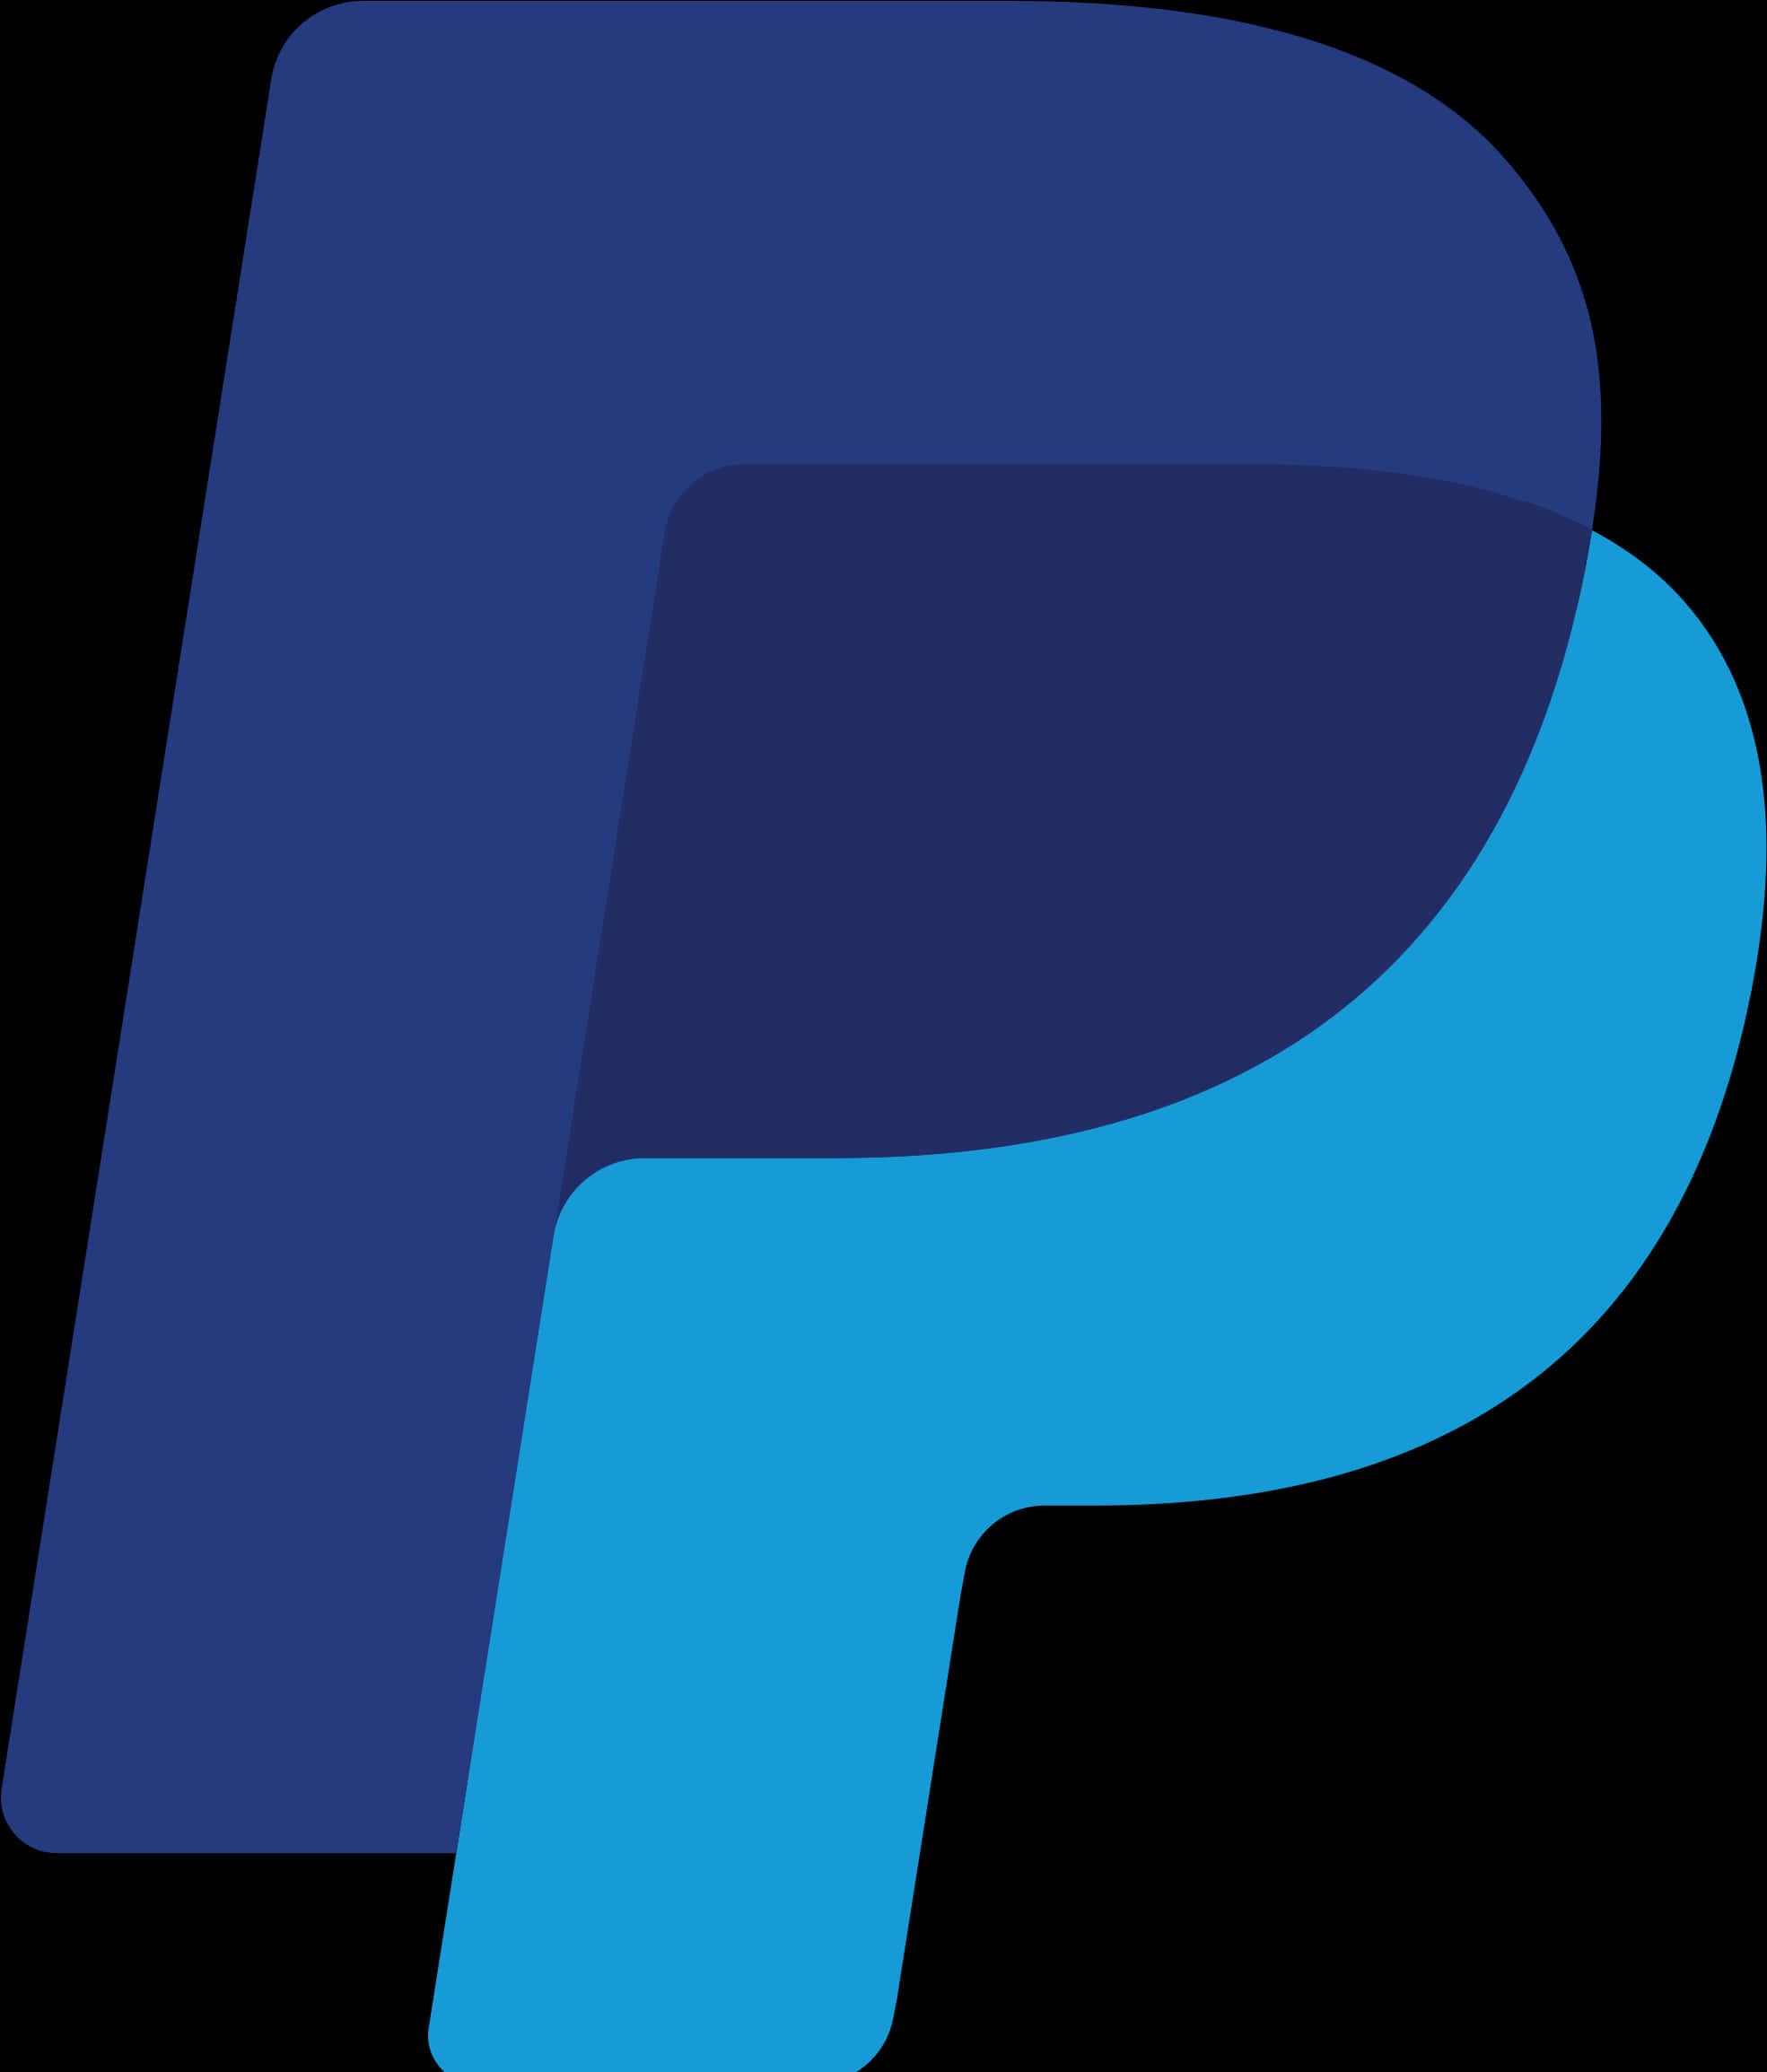 Pay Pal Logo Image PNG image